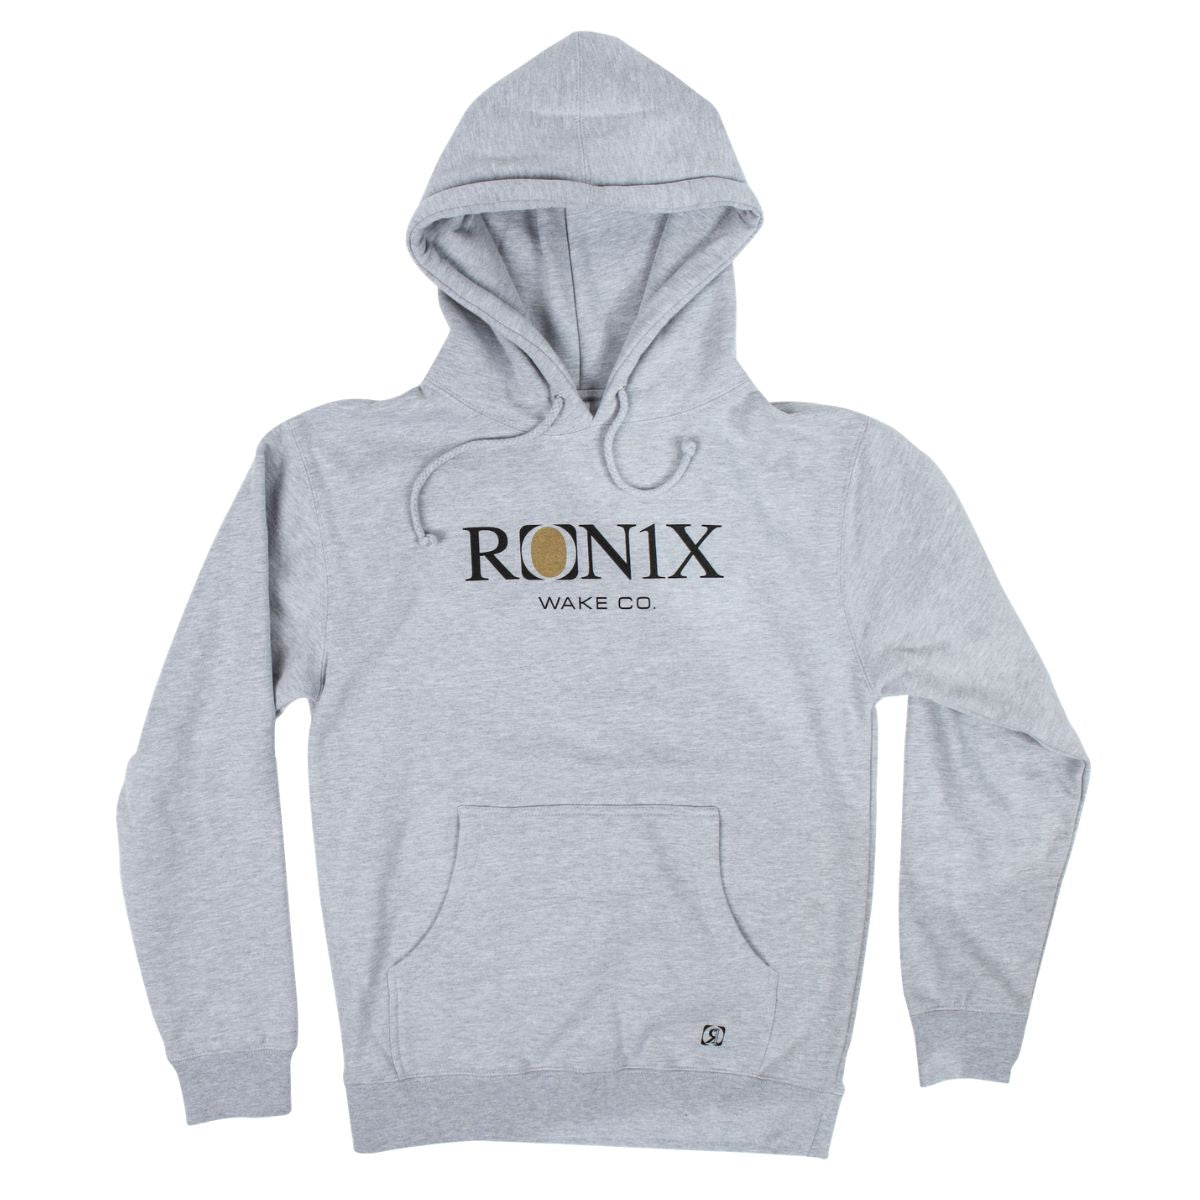 Ronix Throwback Hoody in Ash Grey - BoardCo